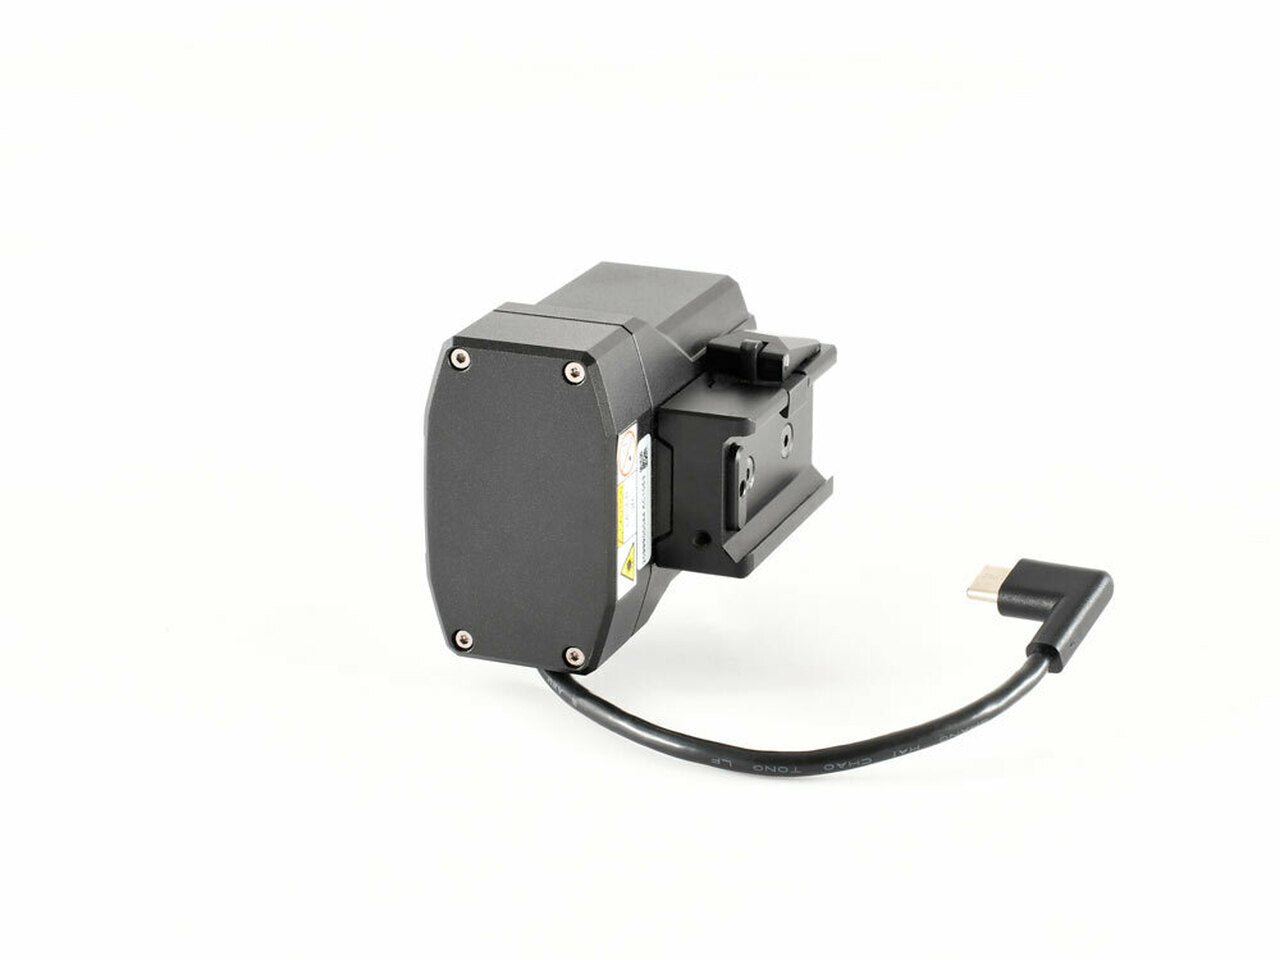 InfiRay Outdoor ILR-1000 Laser Rangefinder for Rico MK1 Series